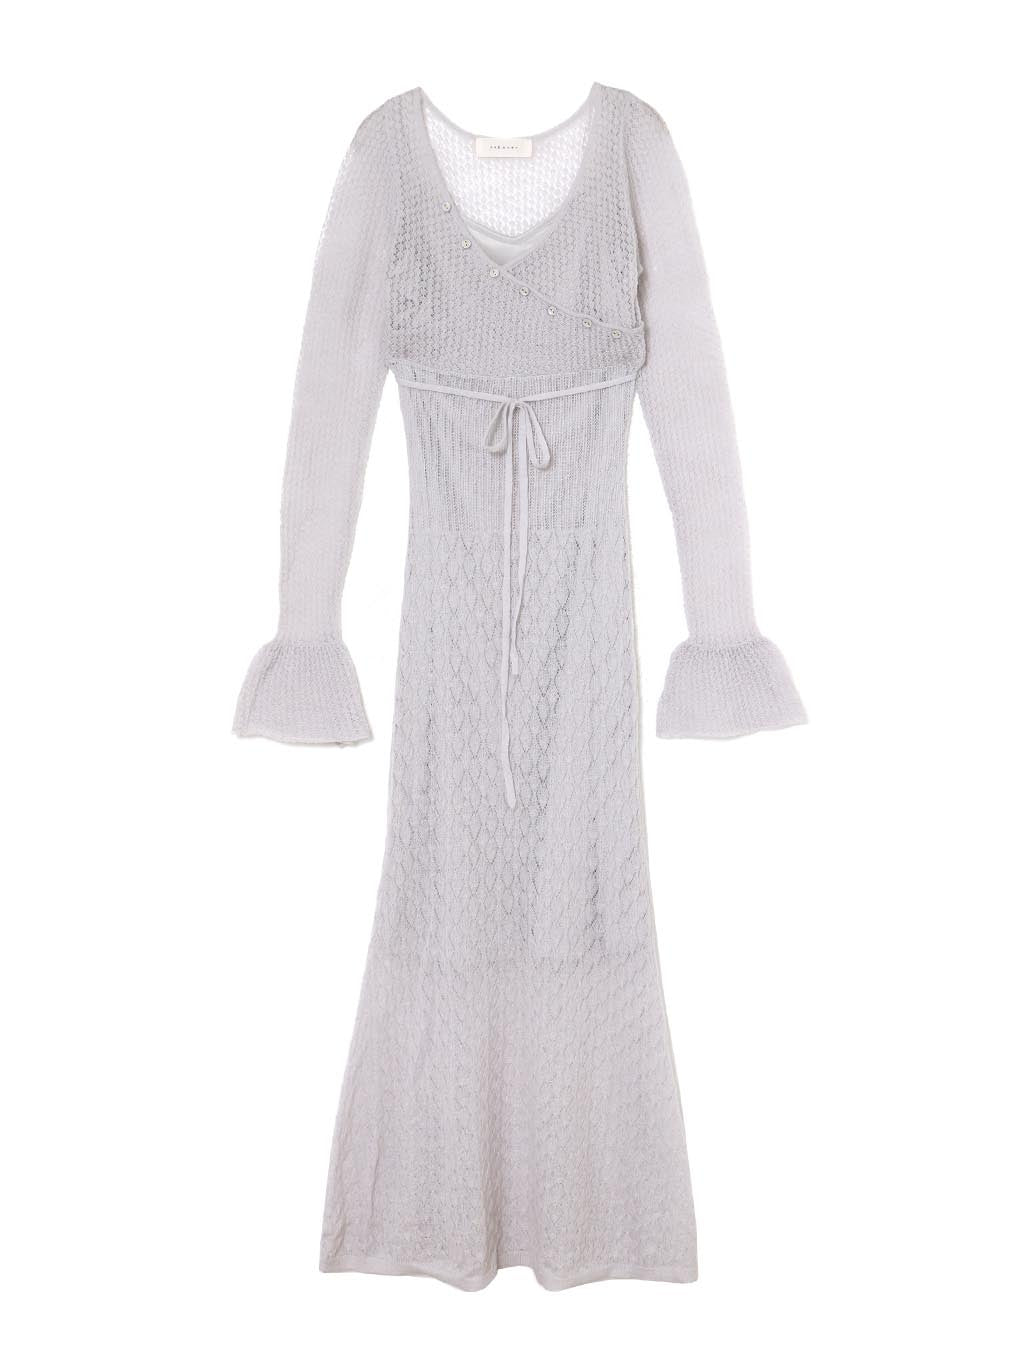 andmary Bella seethrough knit dress全体のお写真アップできませんか